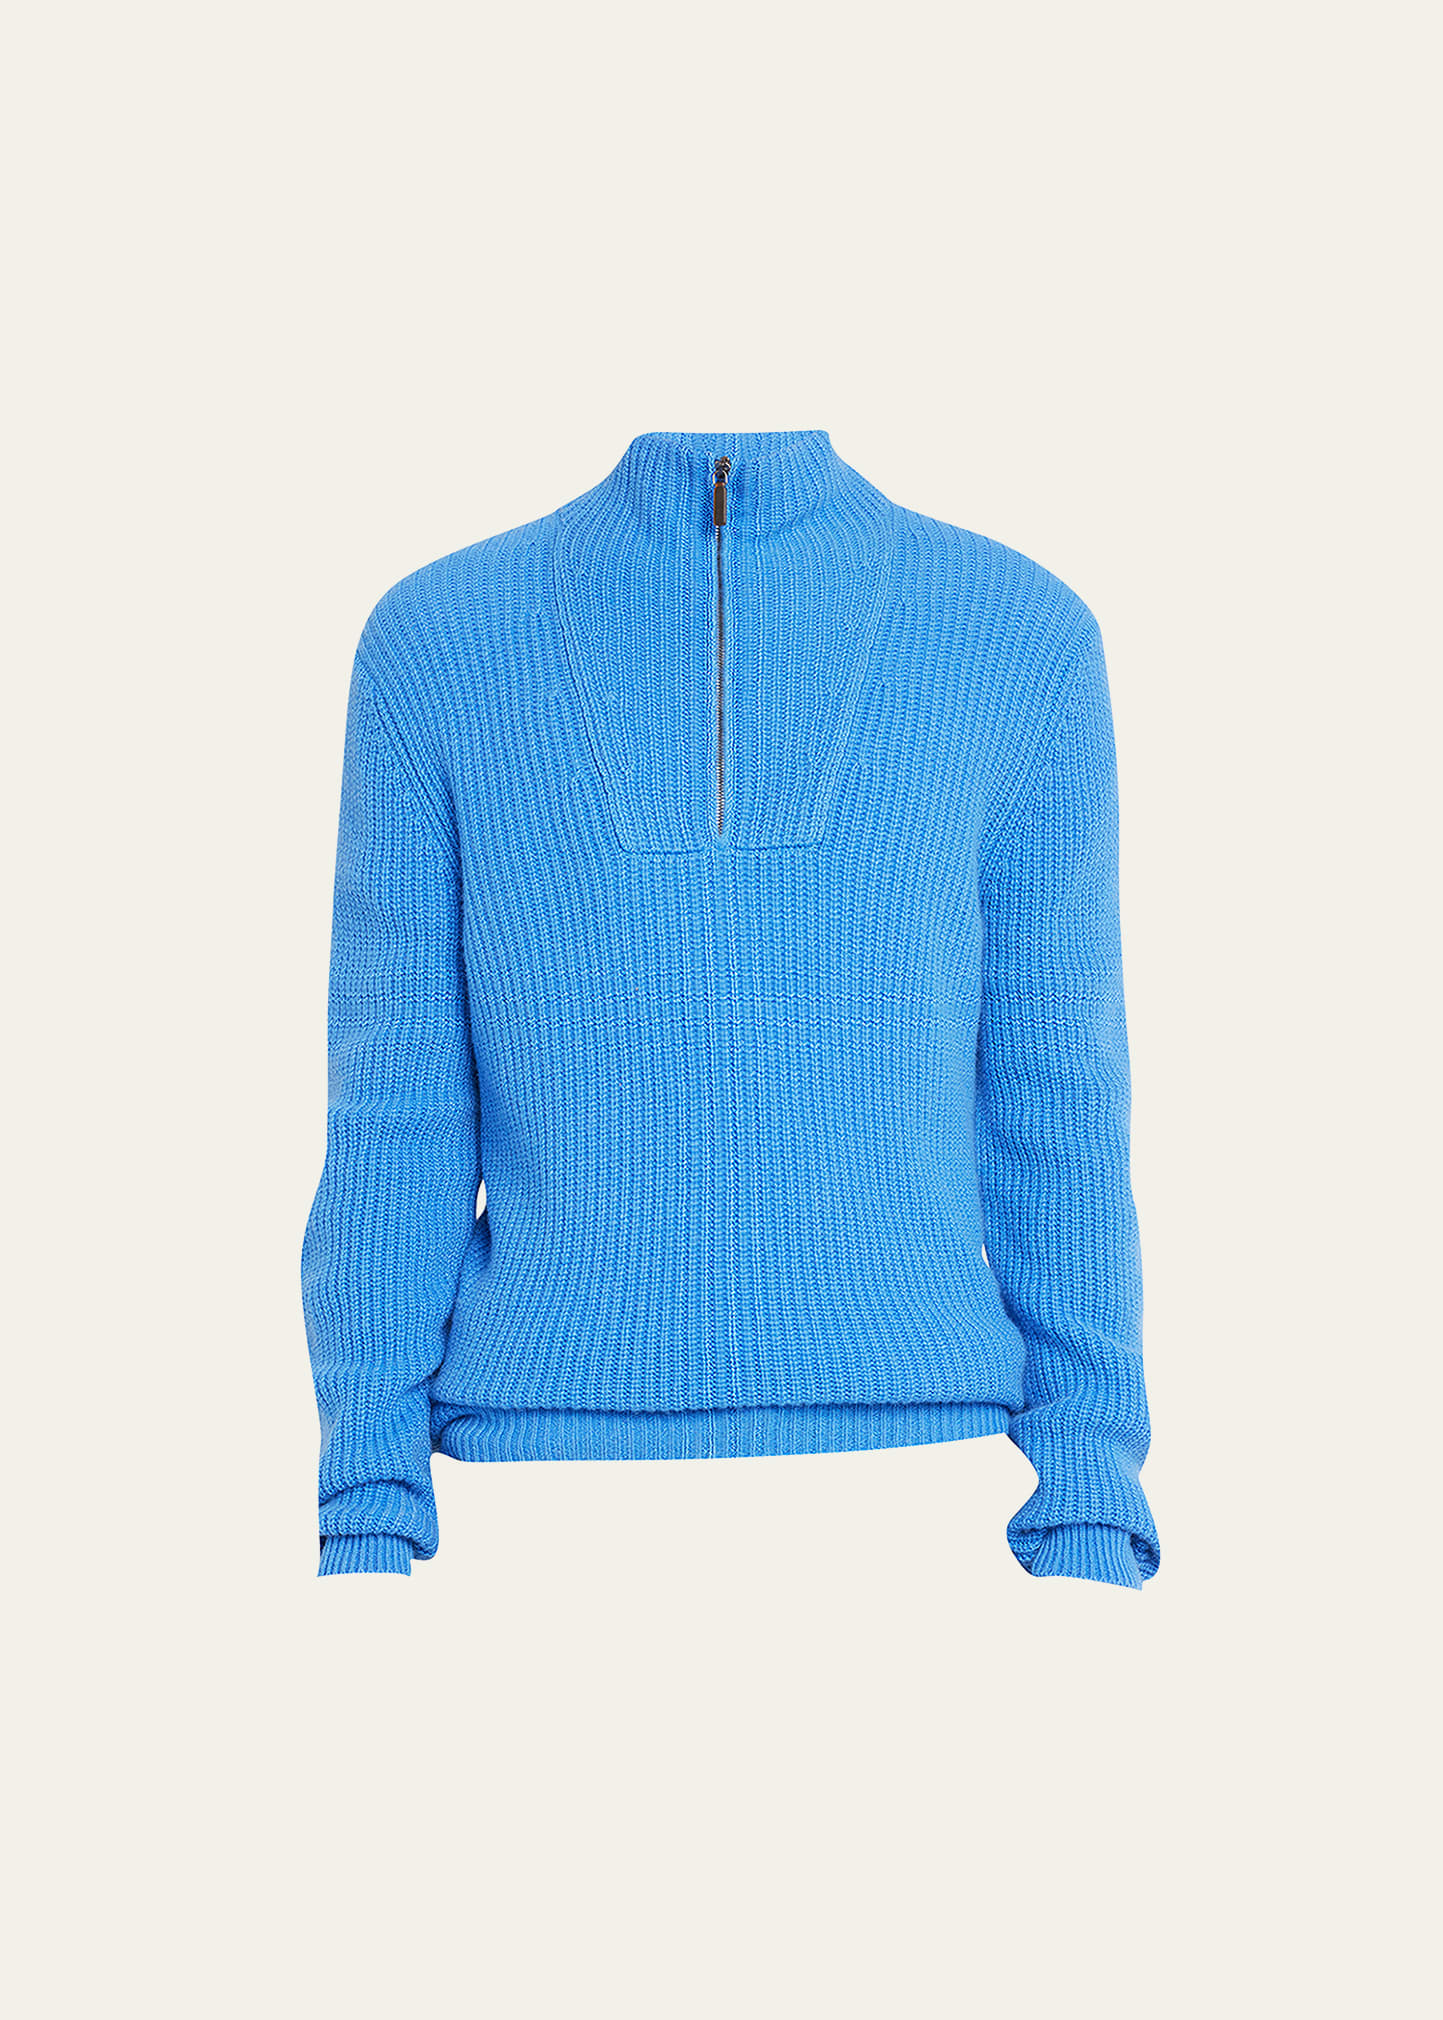 Men's Half-Zip Ribbed Cashmere Sweater